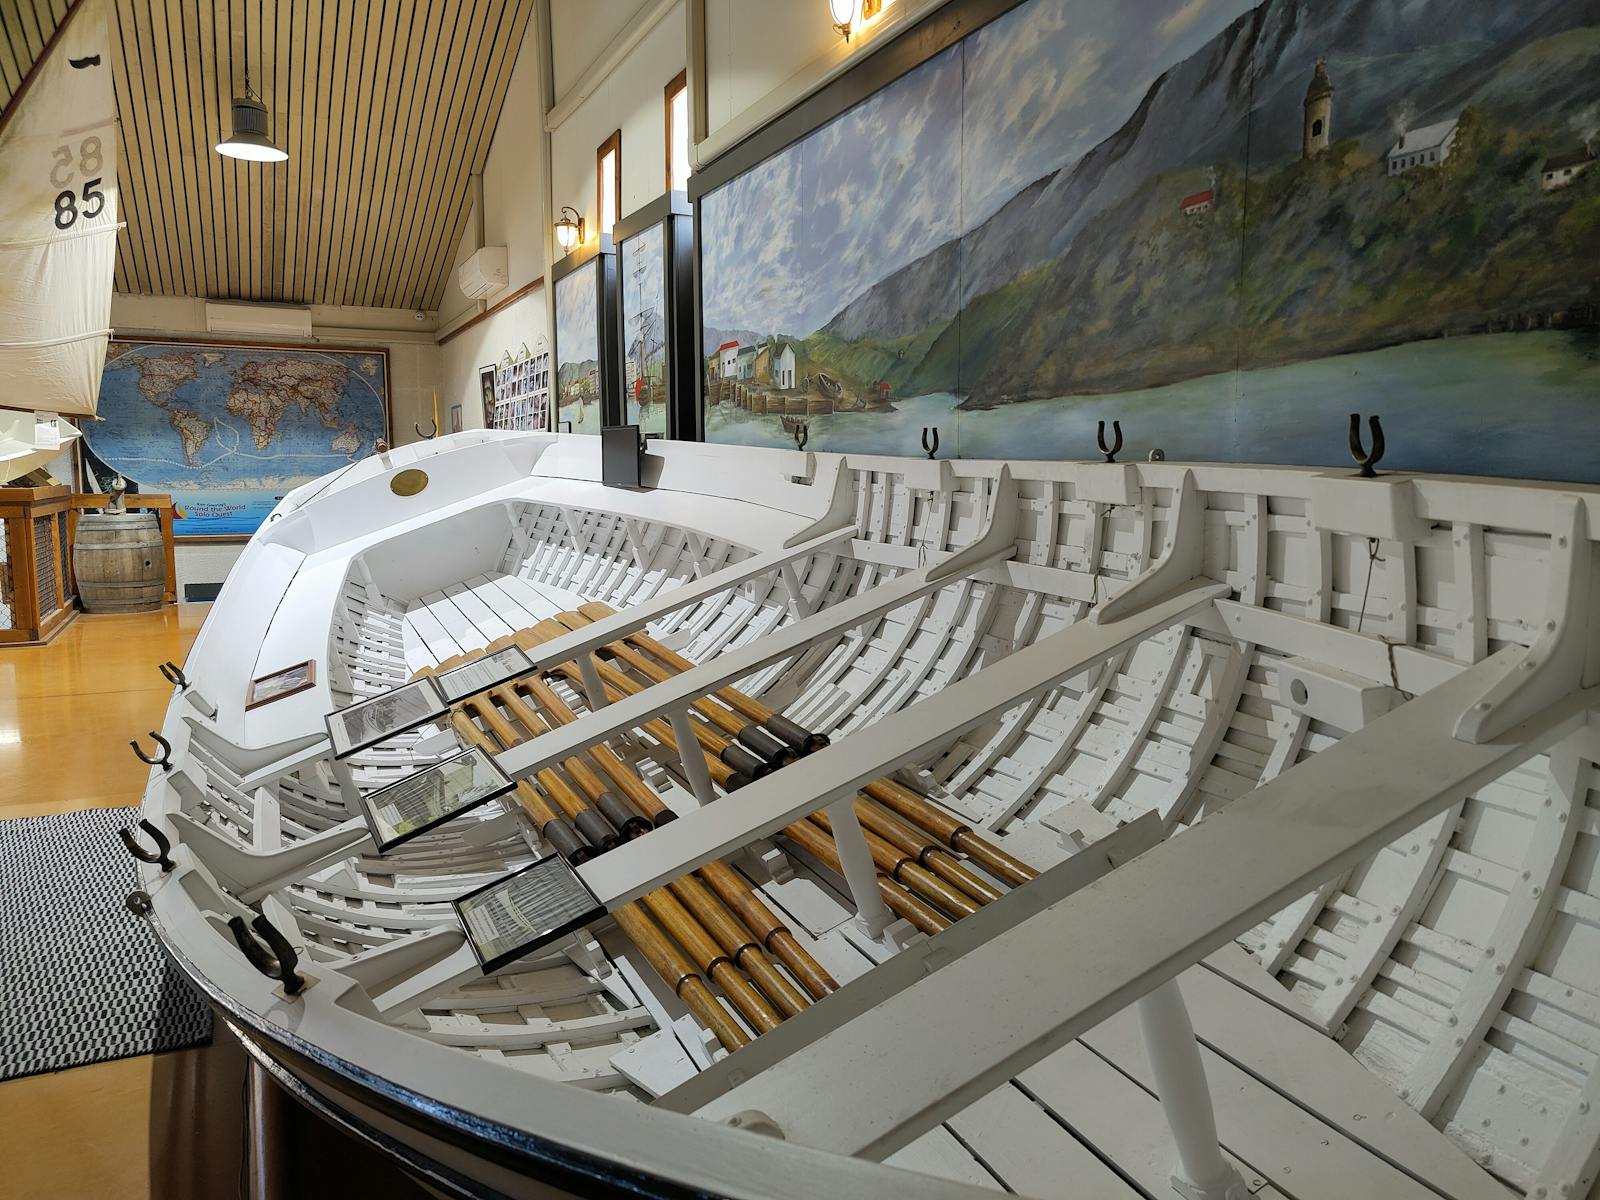 Australia's second oldest boat https://bassandflindersmuseum.com.au/the-admiral